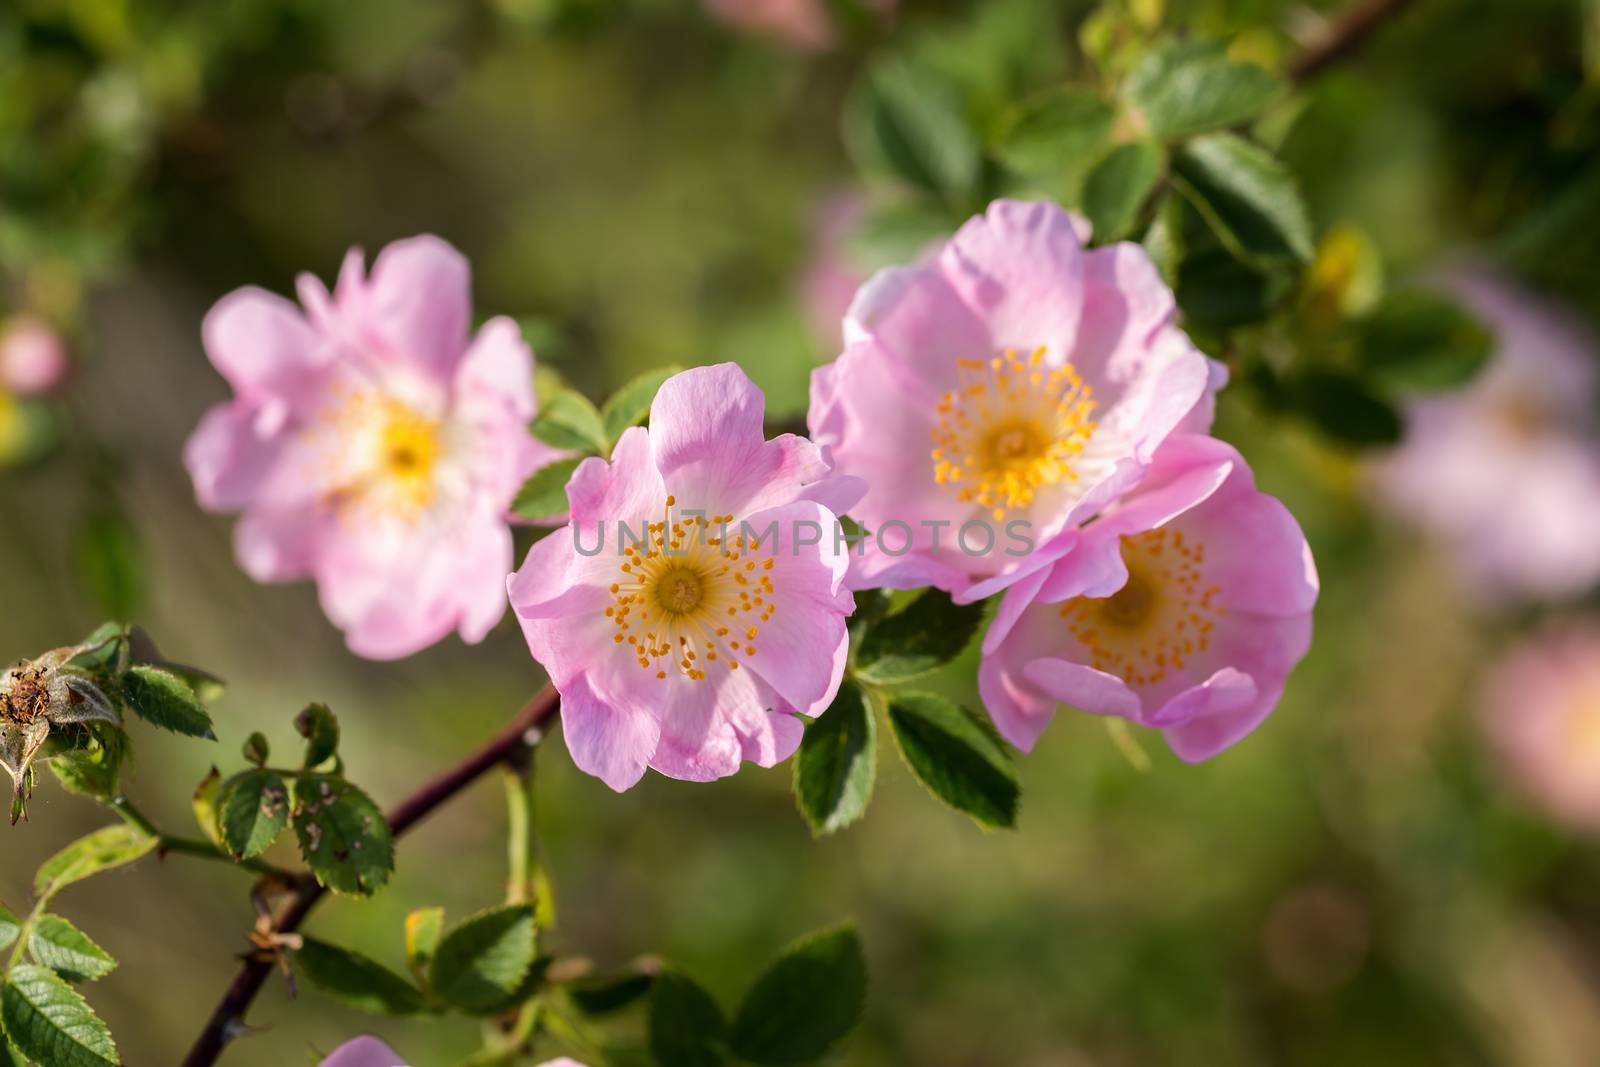 Beautiful blooming wild rose bush (dog rose, Rosa canina) by Digoarpi